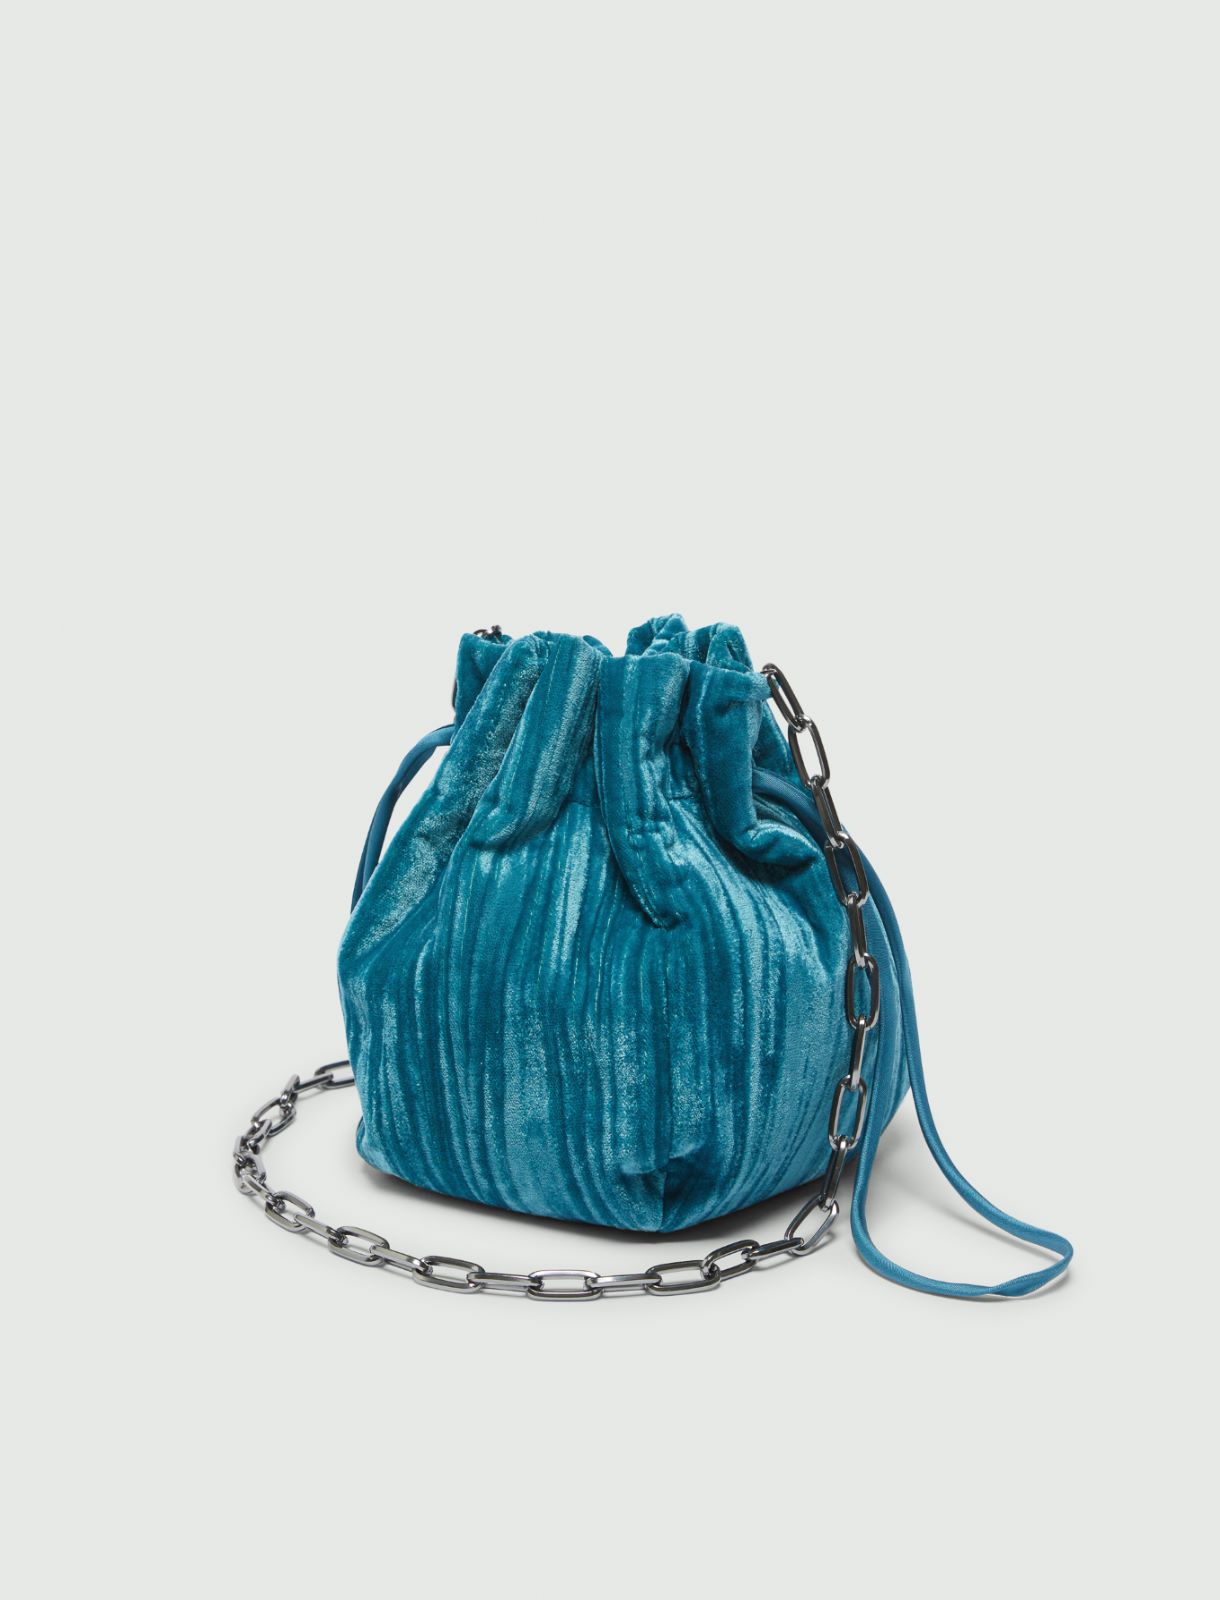 Velvet bag - Peacock blue - Marina Rinaldi - 2